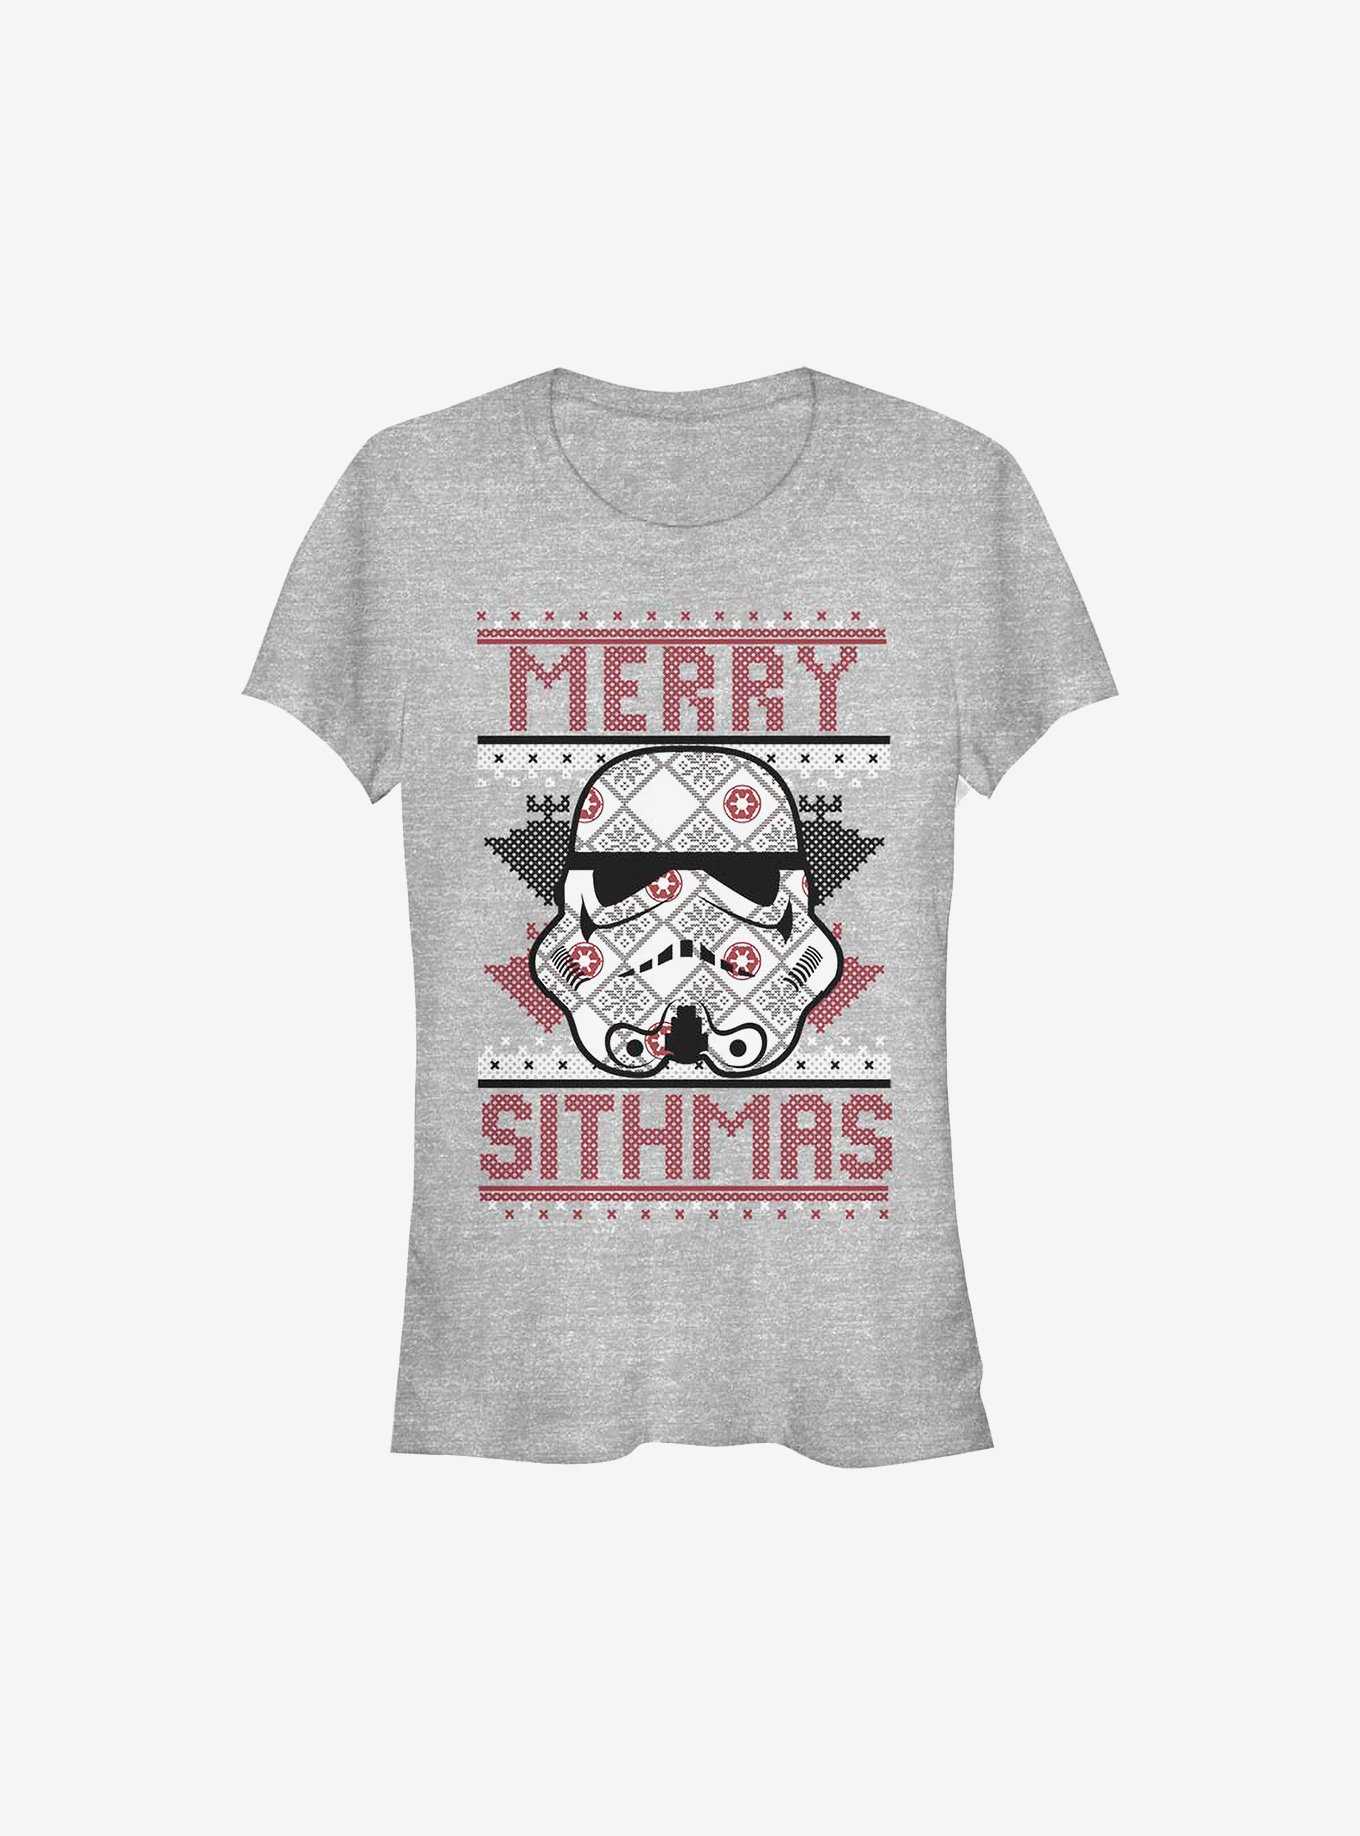 Star Wars Merry Sithmas Ugly Christmas Sweater Girls T-Shirt, , hi-res